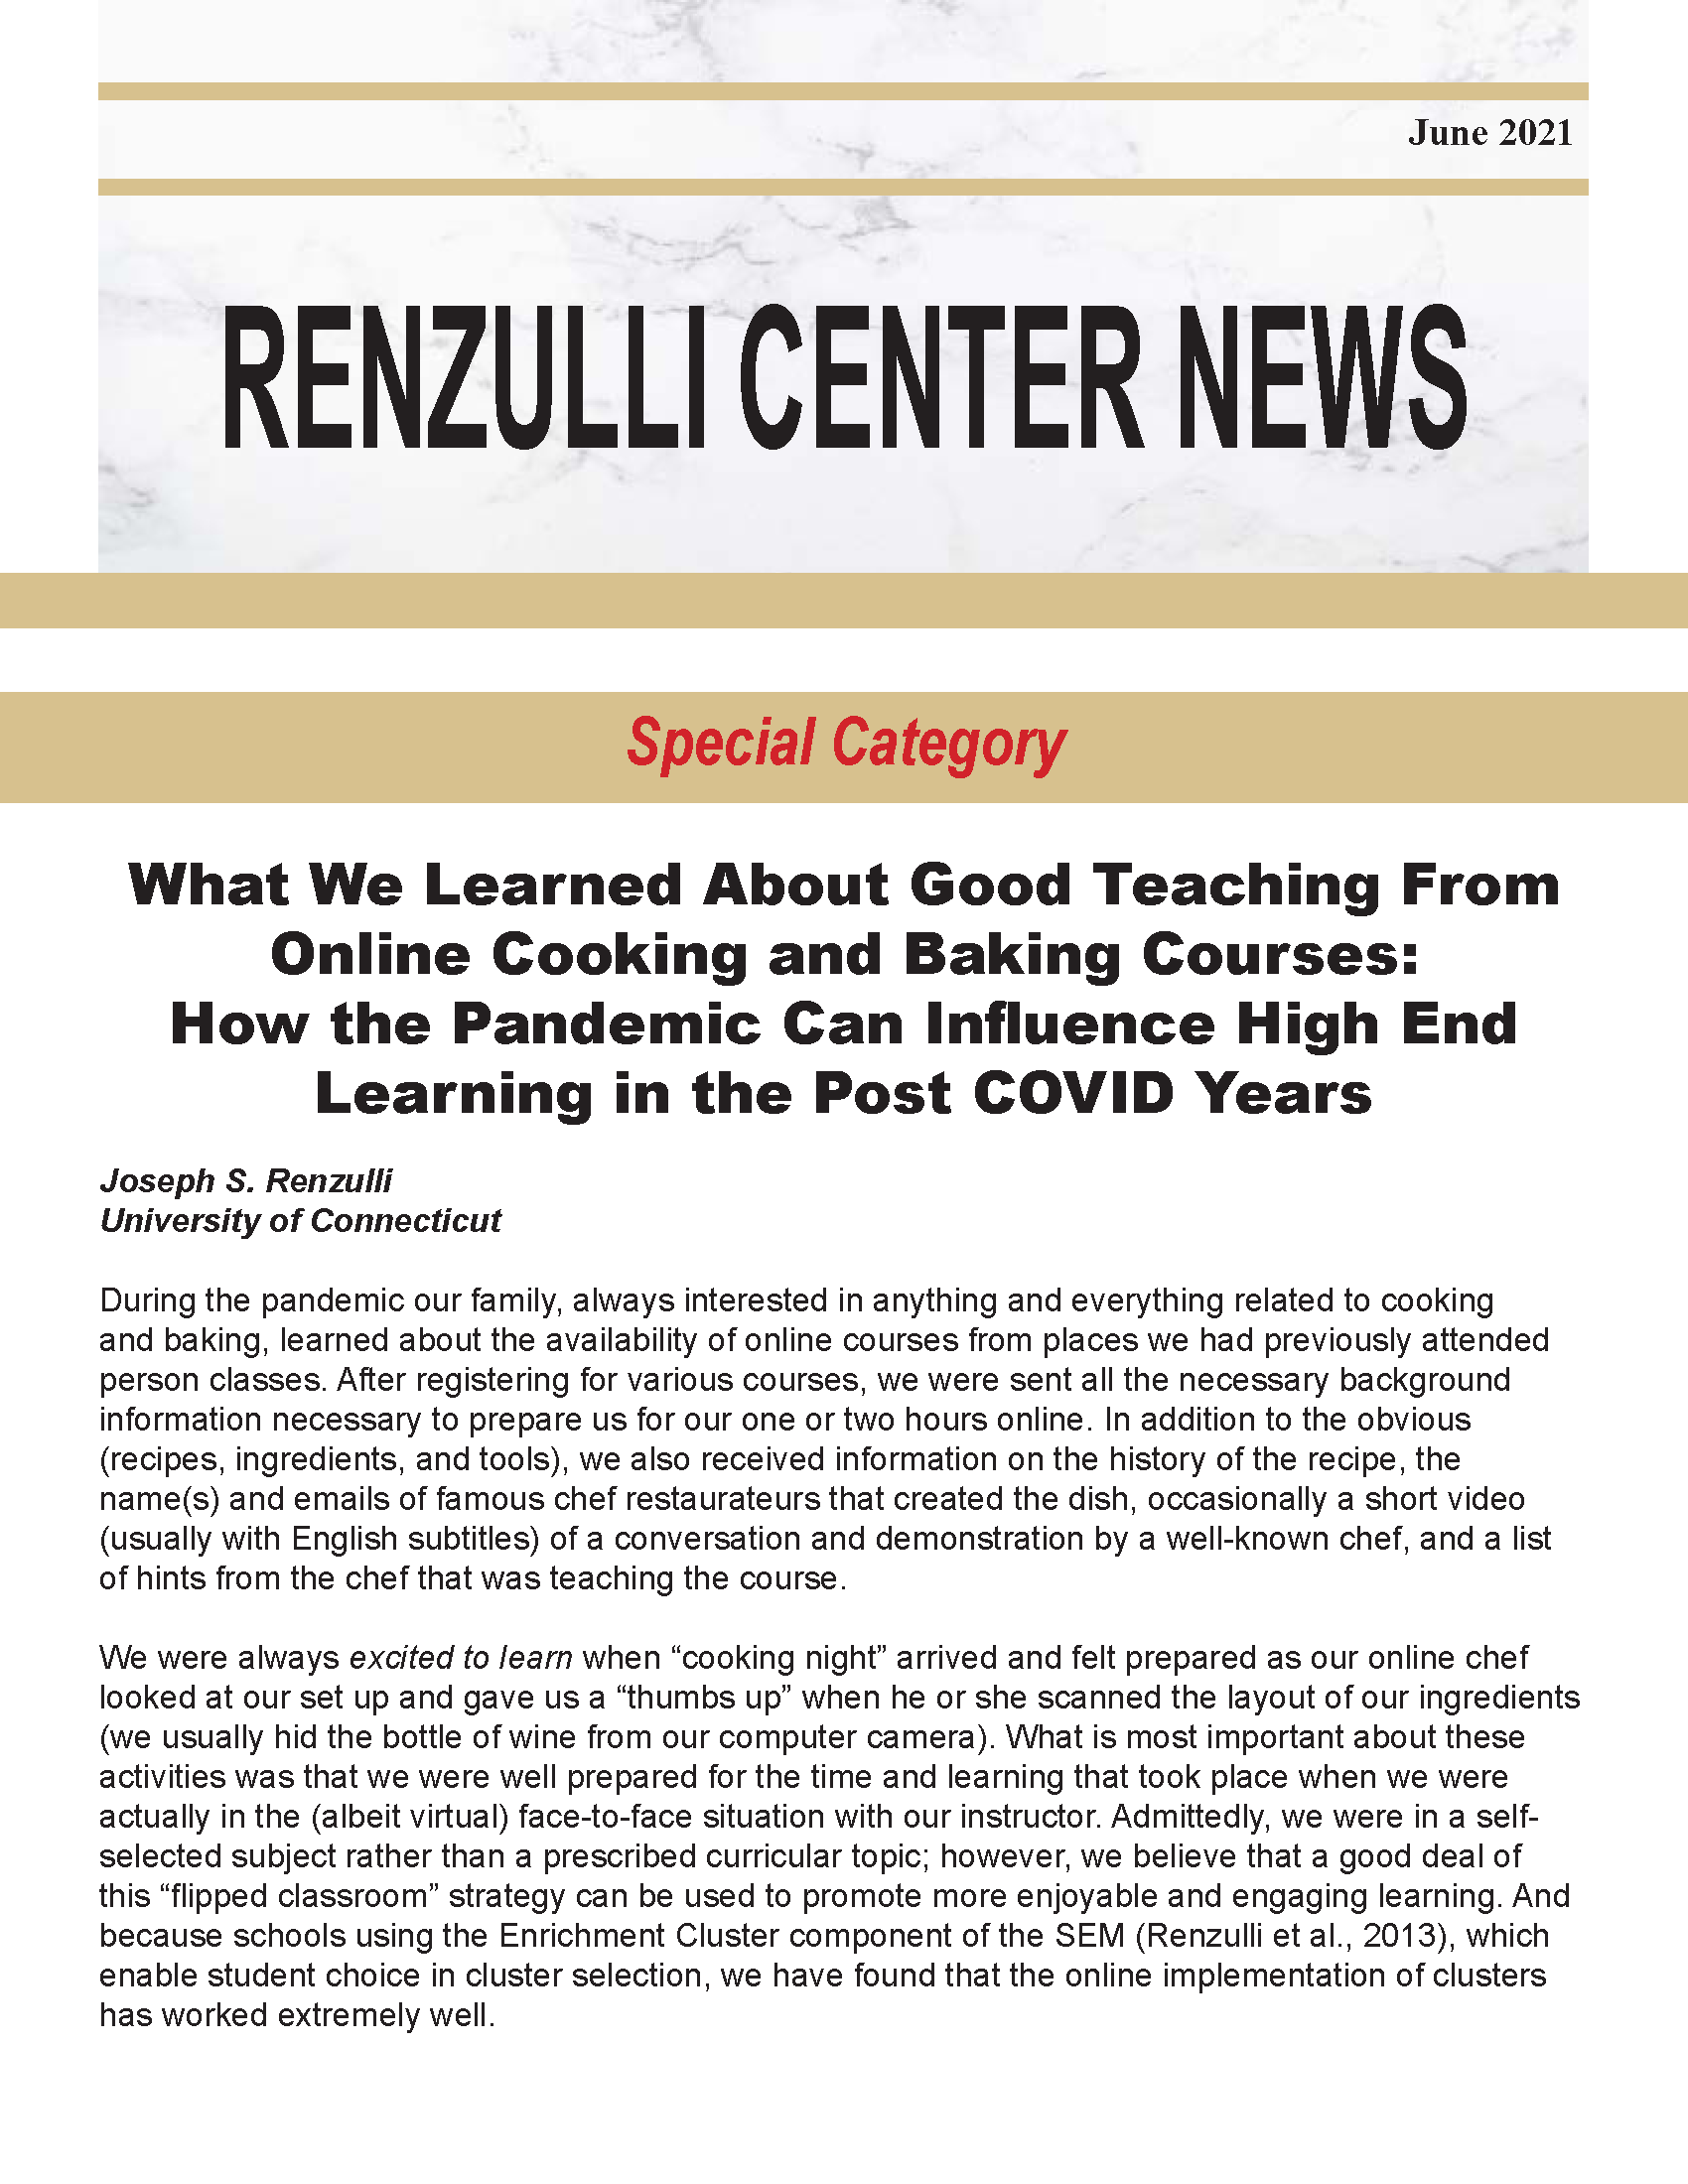 June 2021 Renzulli News Cover Graphic